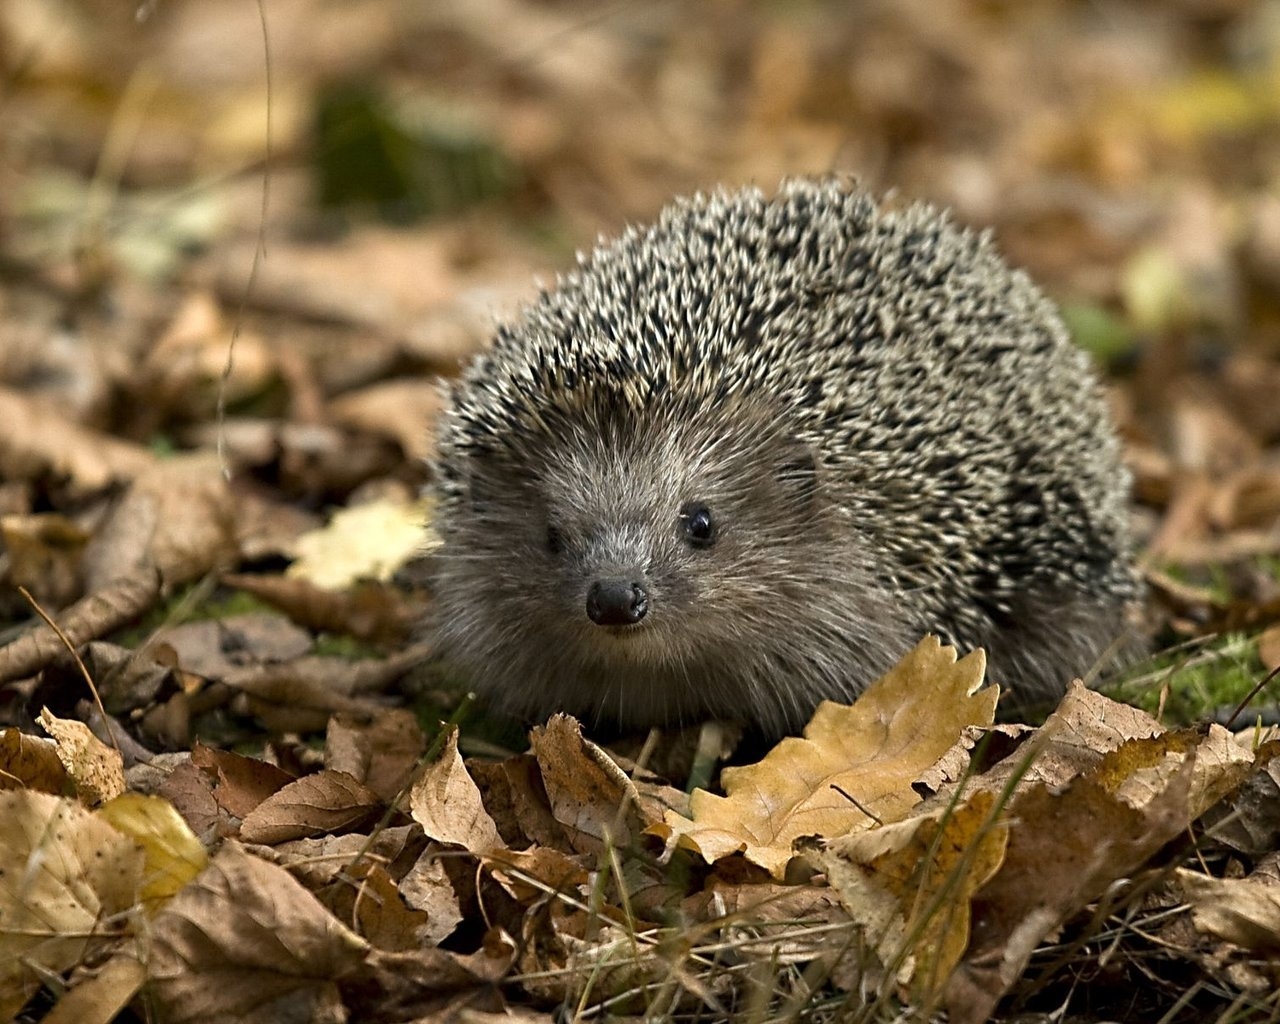 Little Hedgehog for 1280 x 1024 resolution